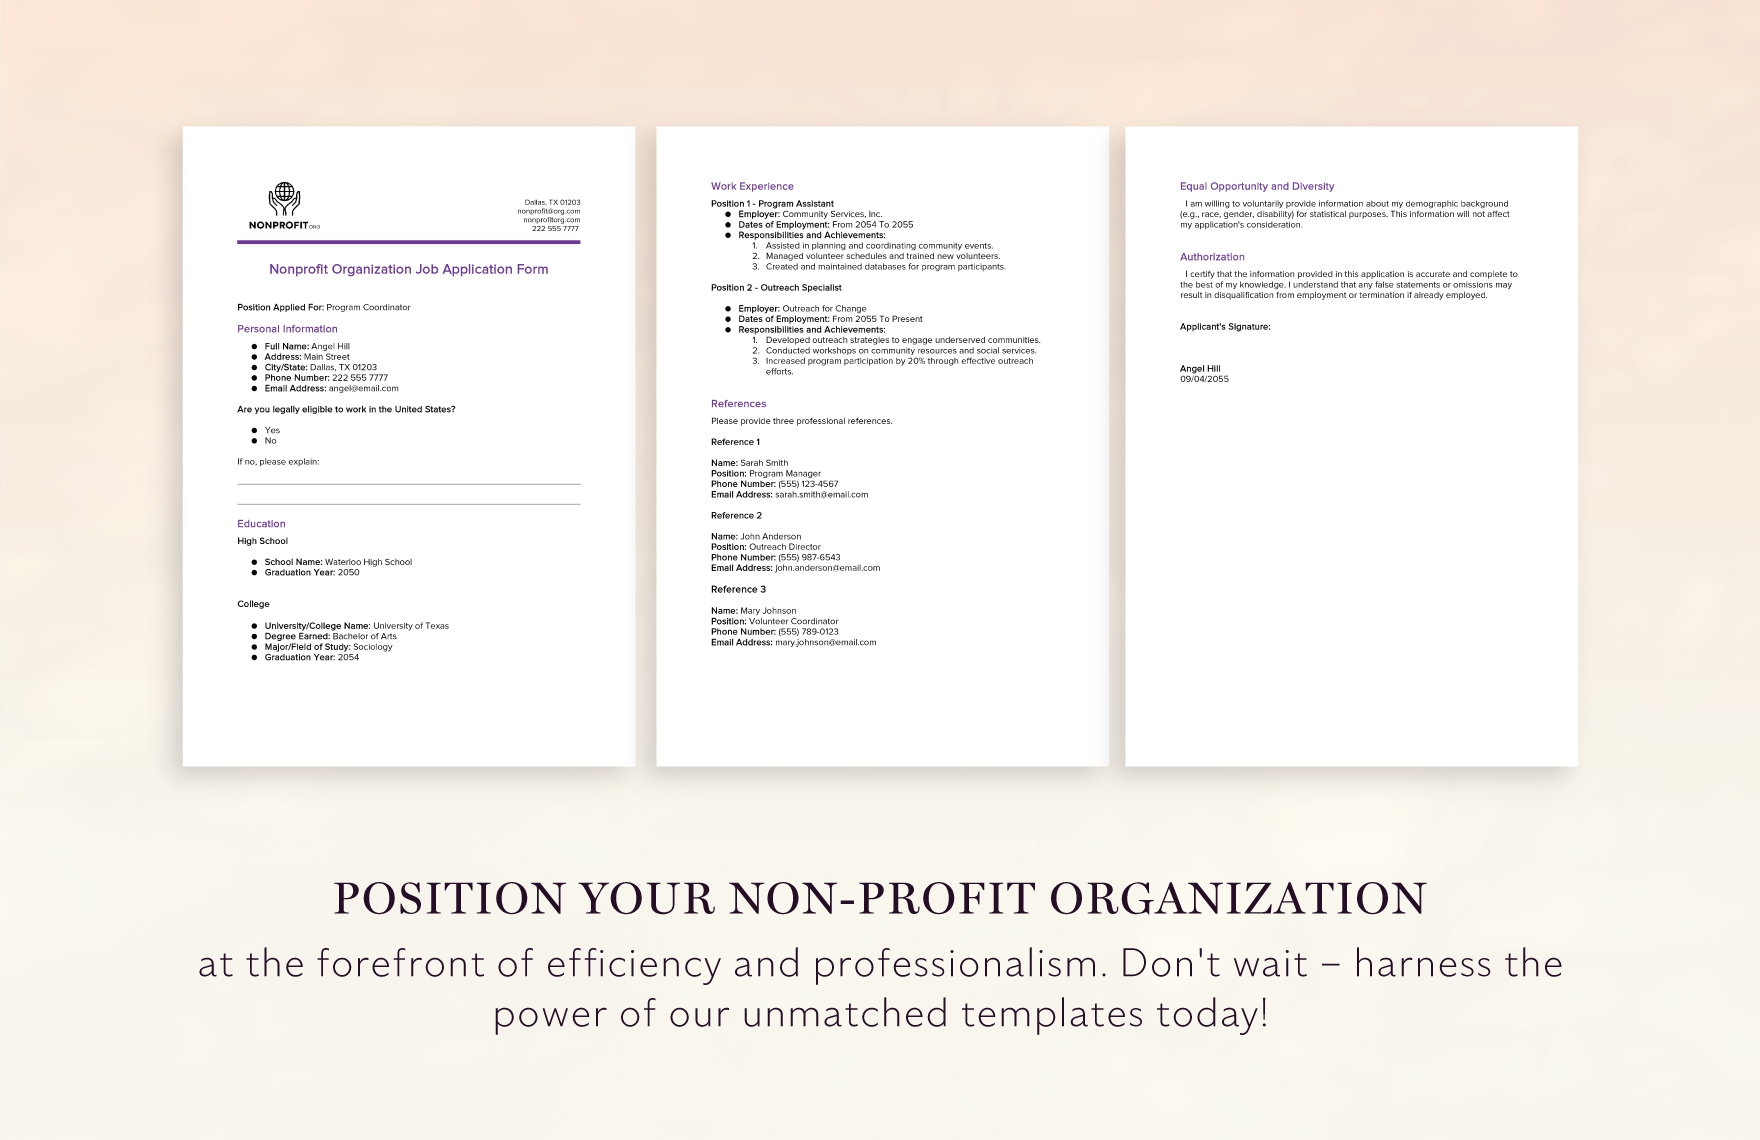 Nonprofit Organization Interview Score Sheet Template